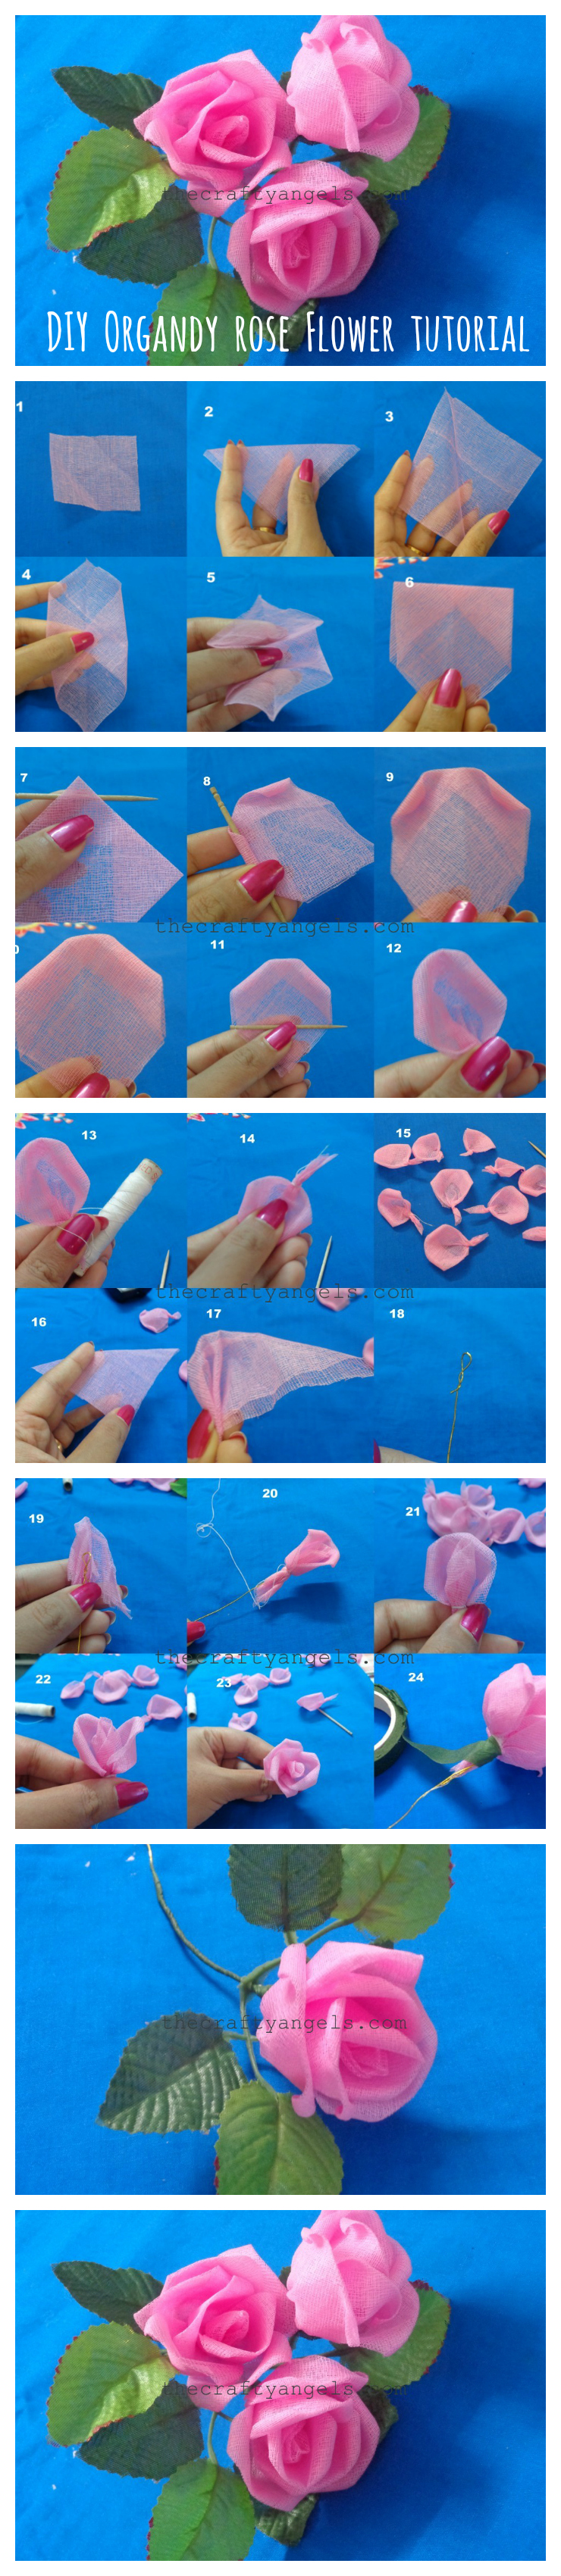  DIY organdy rose flower tutorial collage, flower tutorial, wedding flower, diy flowers, diy fabric flowers